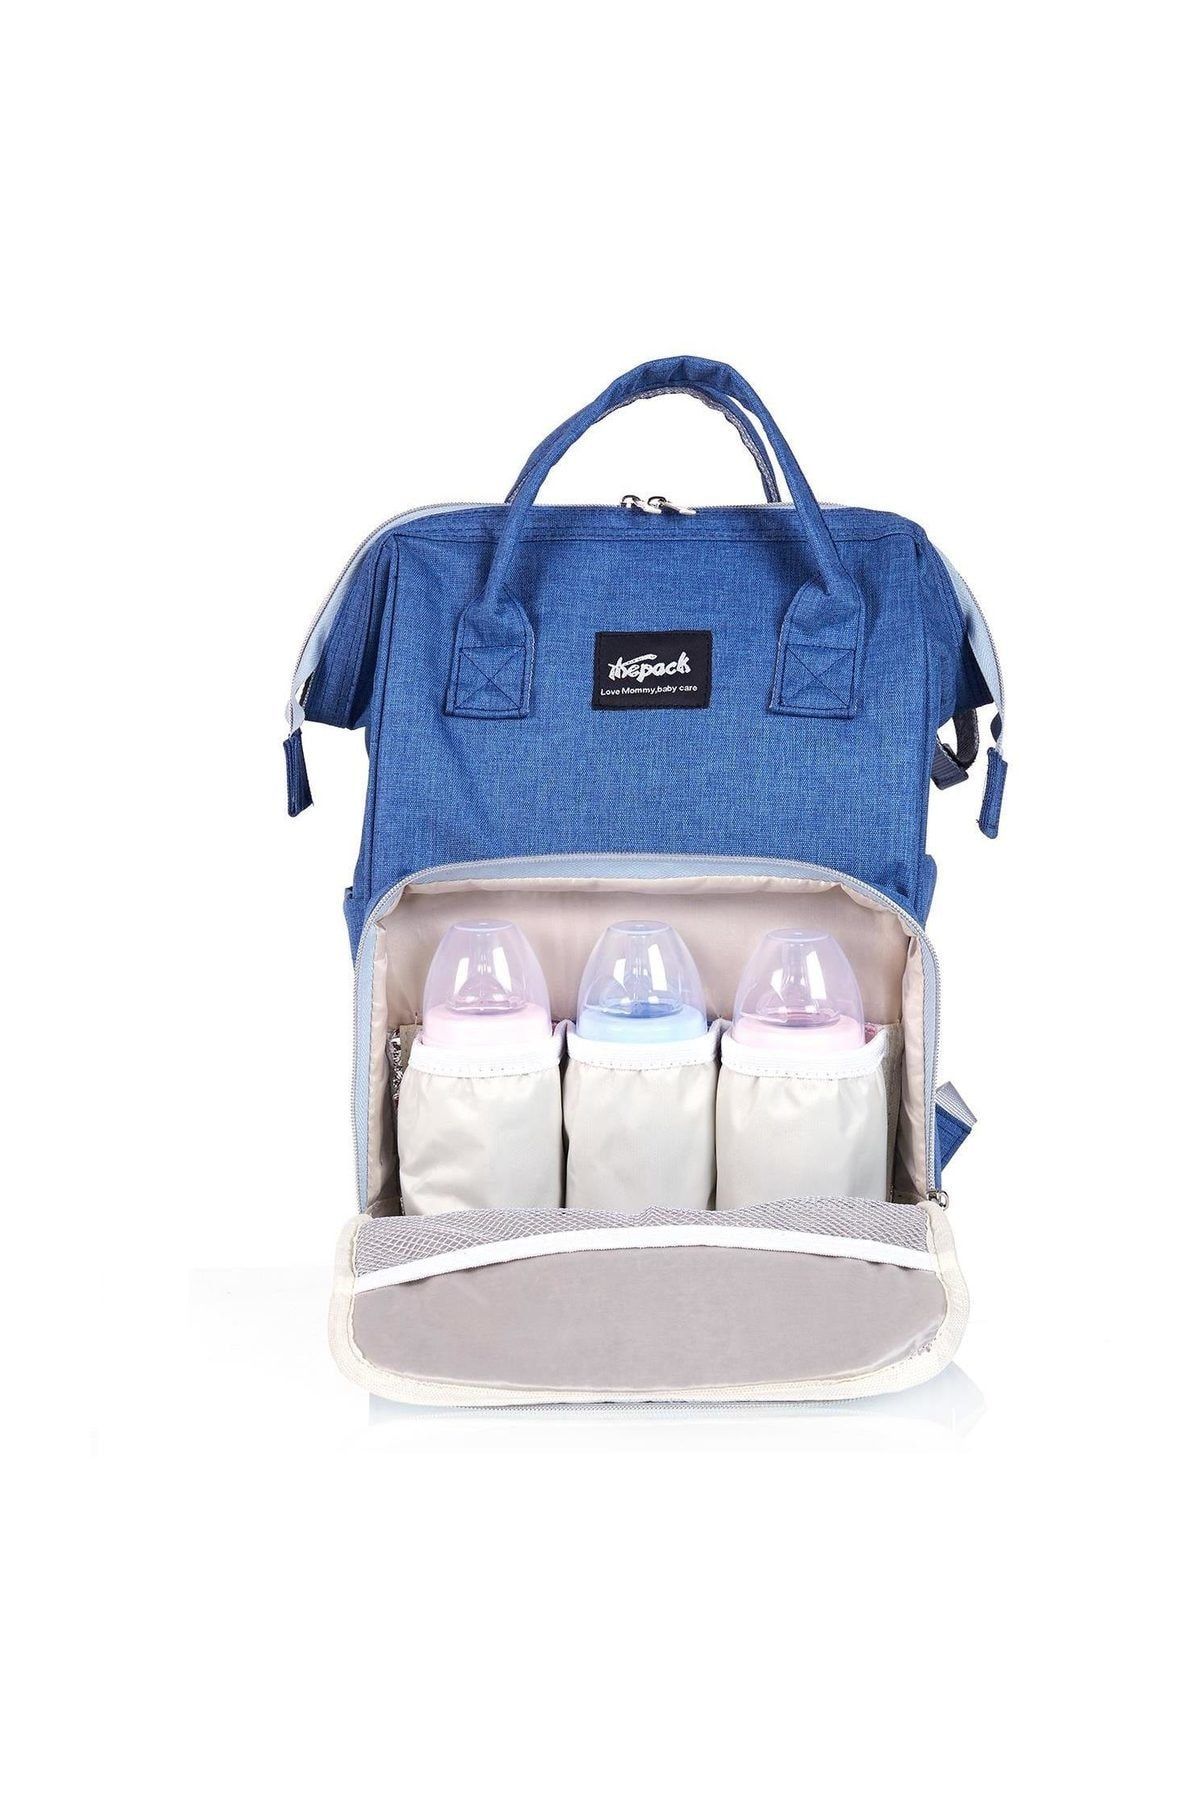 Thepack Bebek bakım çantası Thepack Trendy Keten Mavi